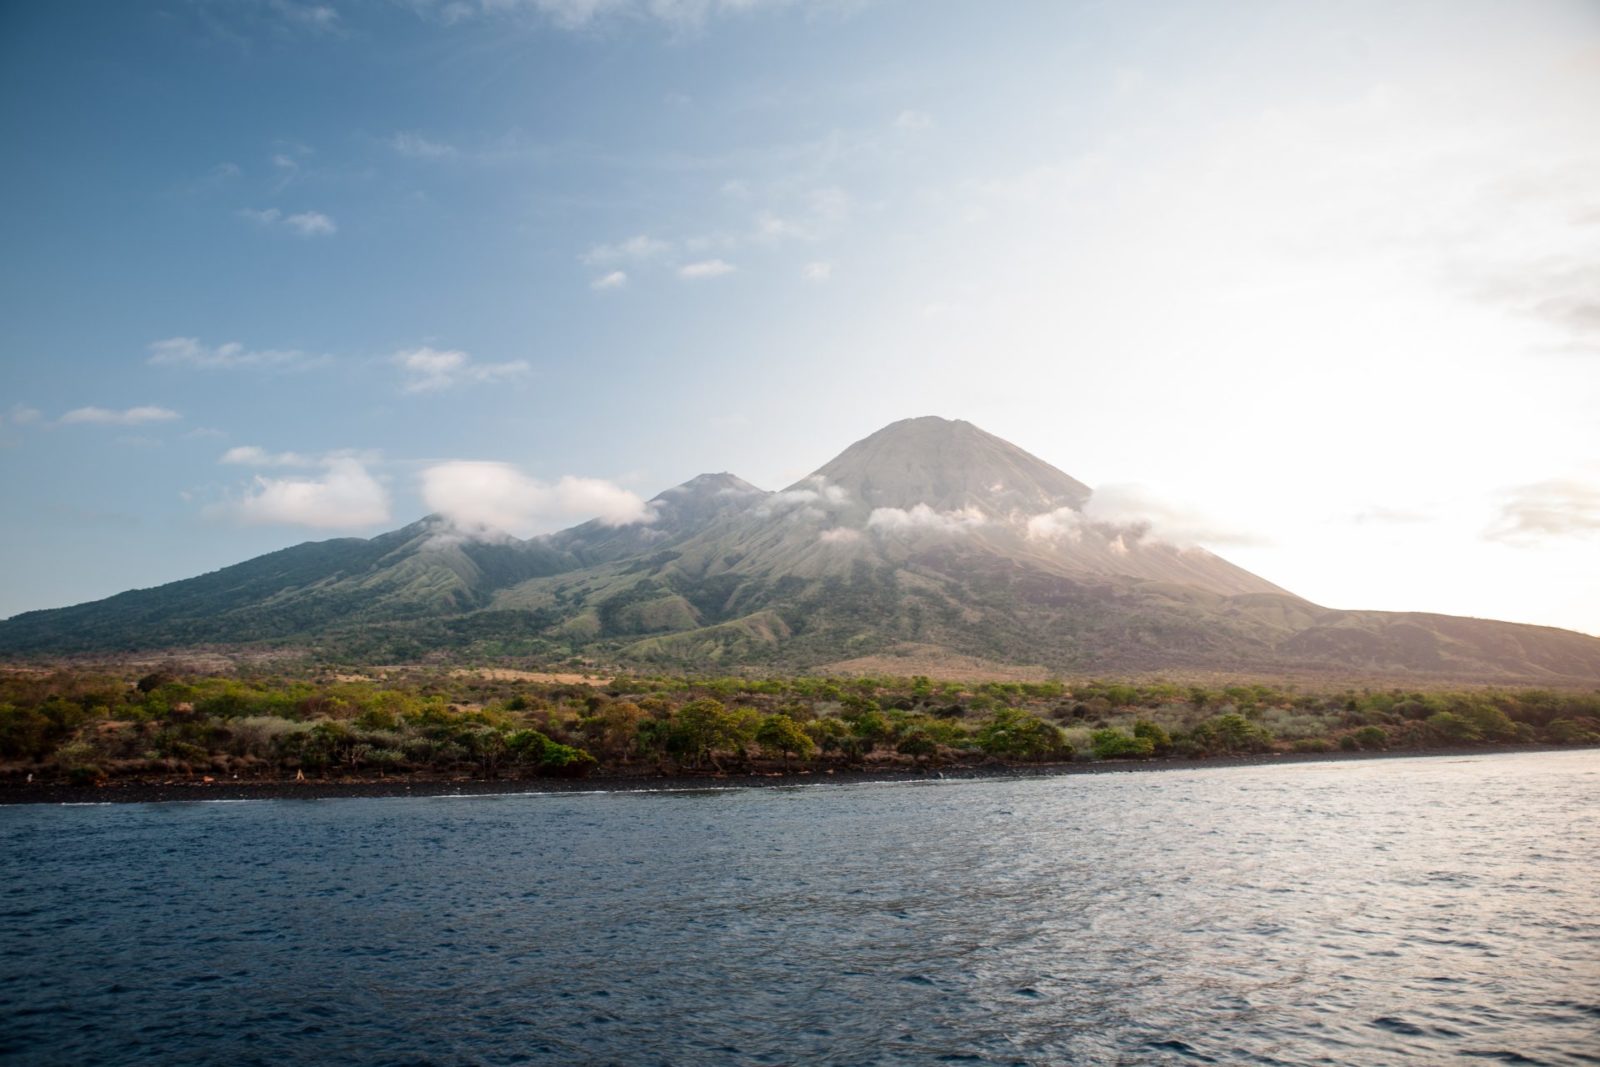 Explore mount Sangeang volcano with Hello Flores